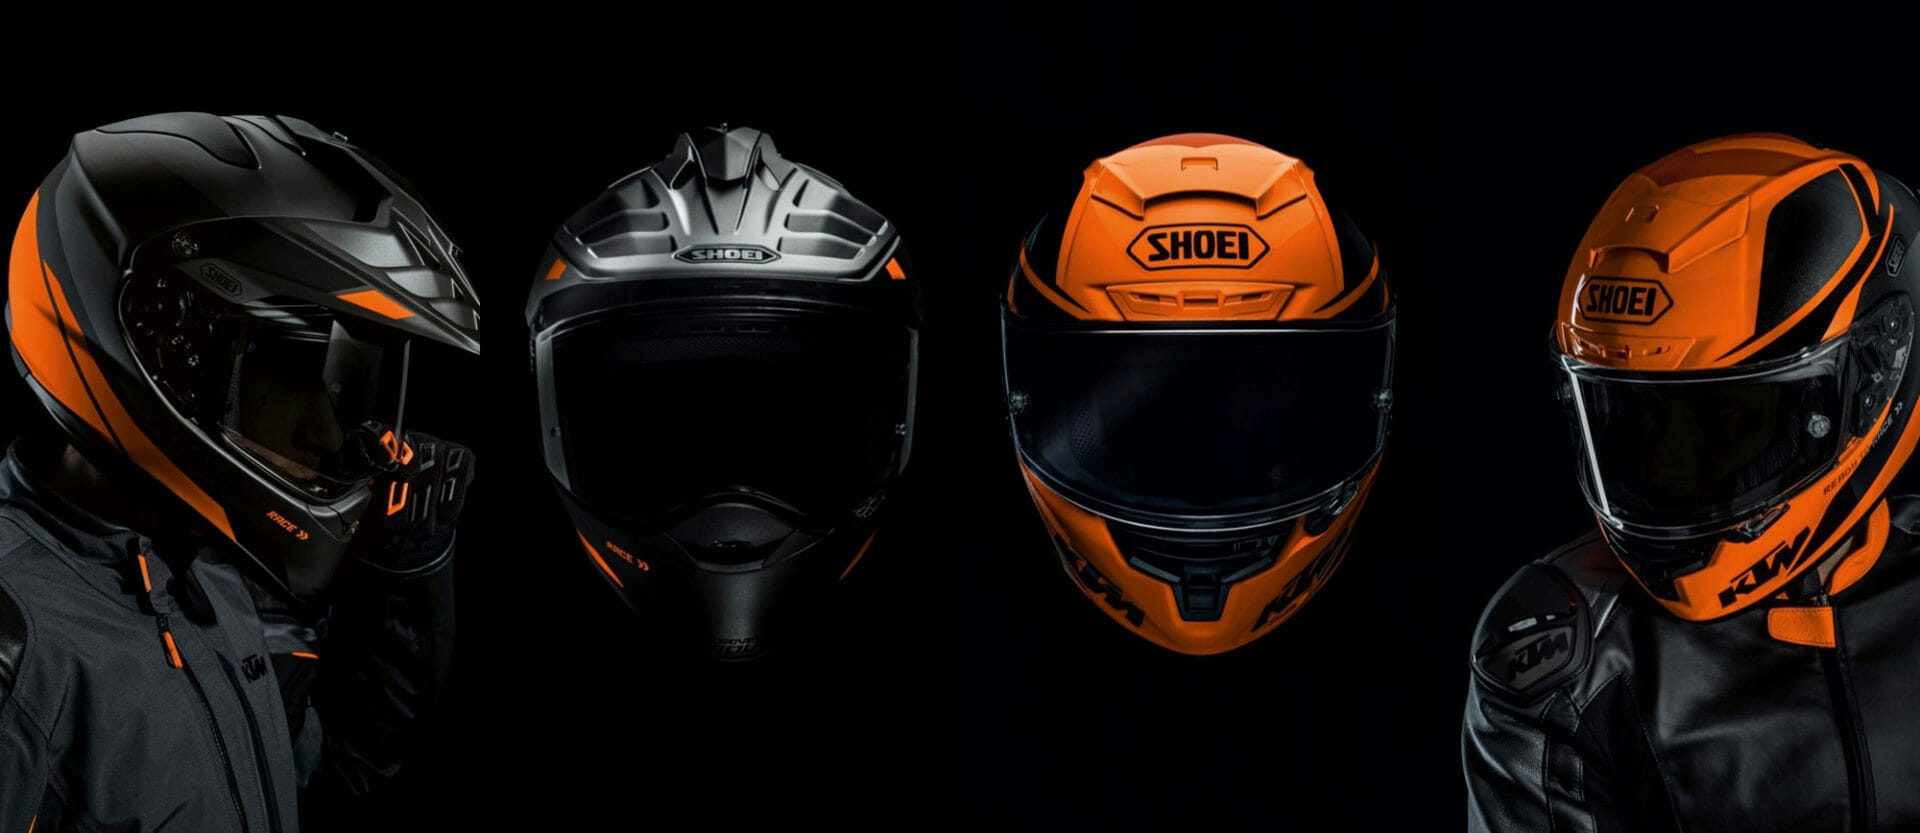 KTM_SHOEI Helmets_Header